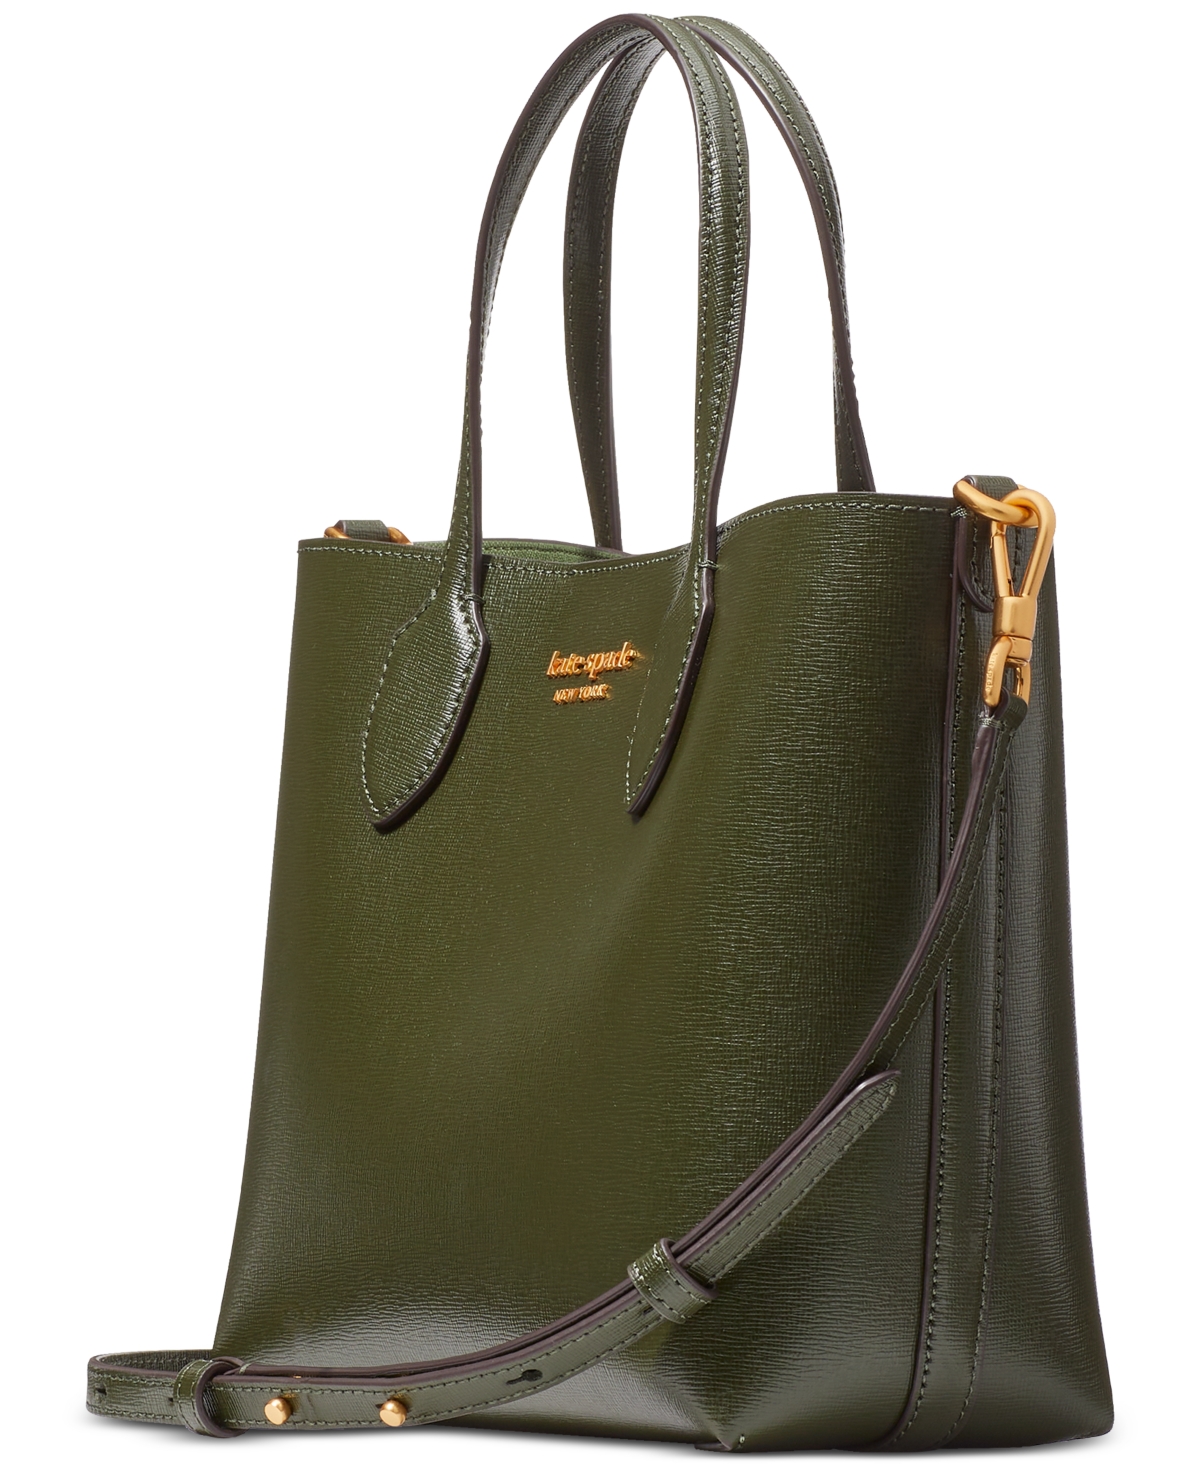 Kate Spade New York Saffiano Leather Crossbody Bag